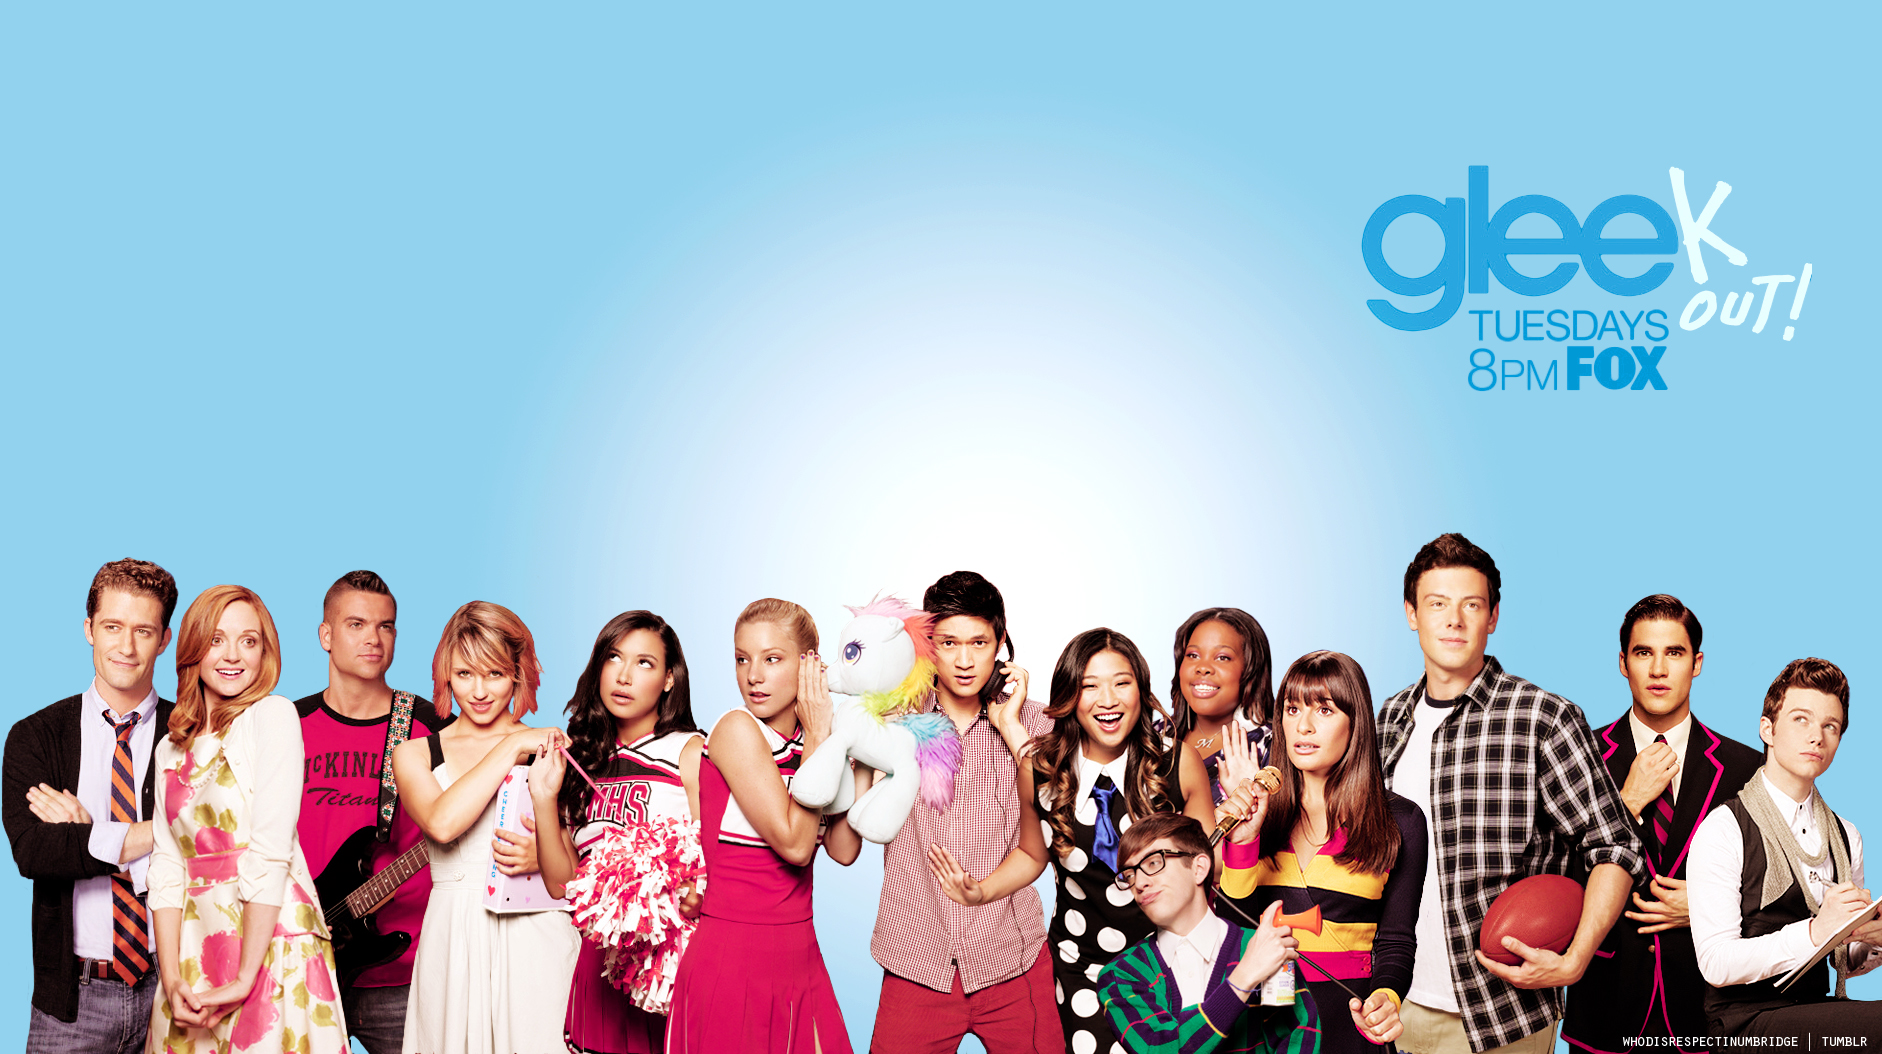 Free Download Glee Season 3 Wallpaper 18x1054 For Your Desktop Mobile Tablet Explore 50 Glee Wallpaper Season 3 Glee Wallpaper For Desktop